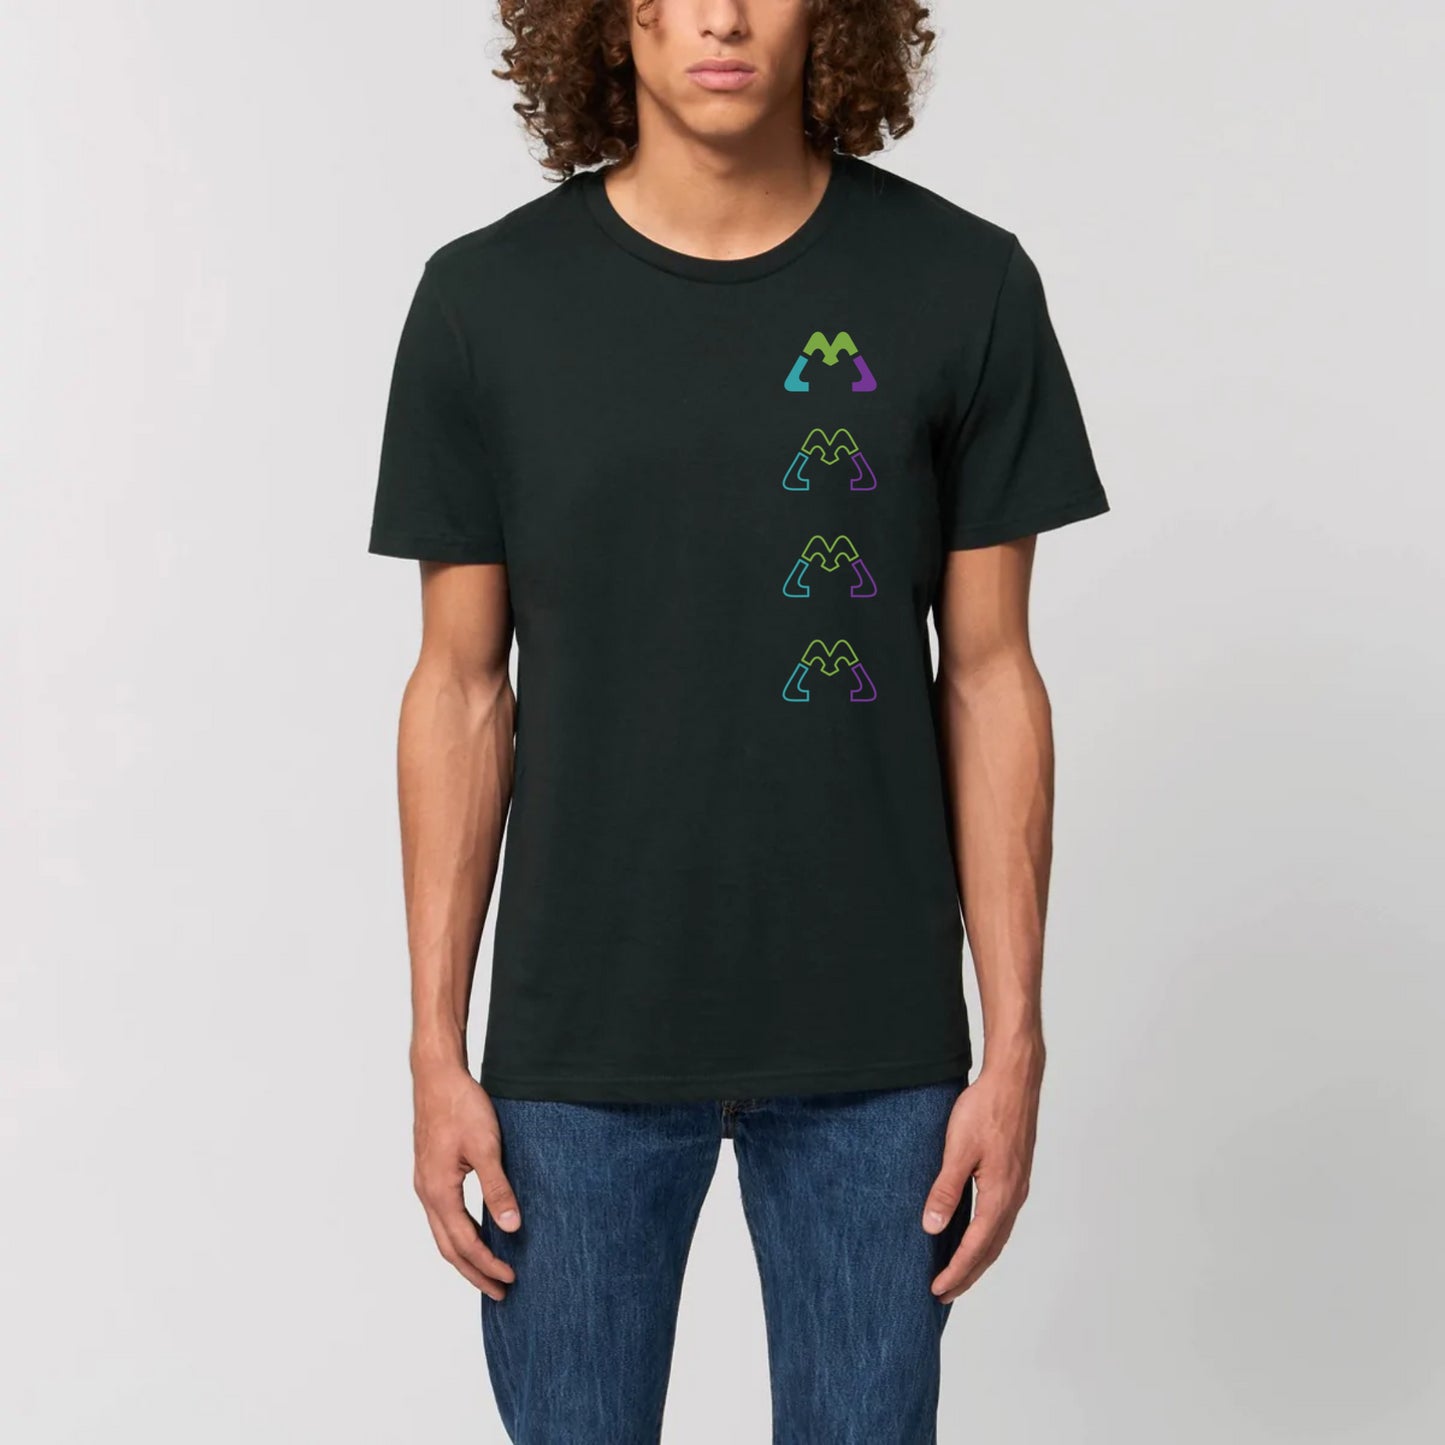 MMM — t-shirt, unisex, organic